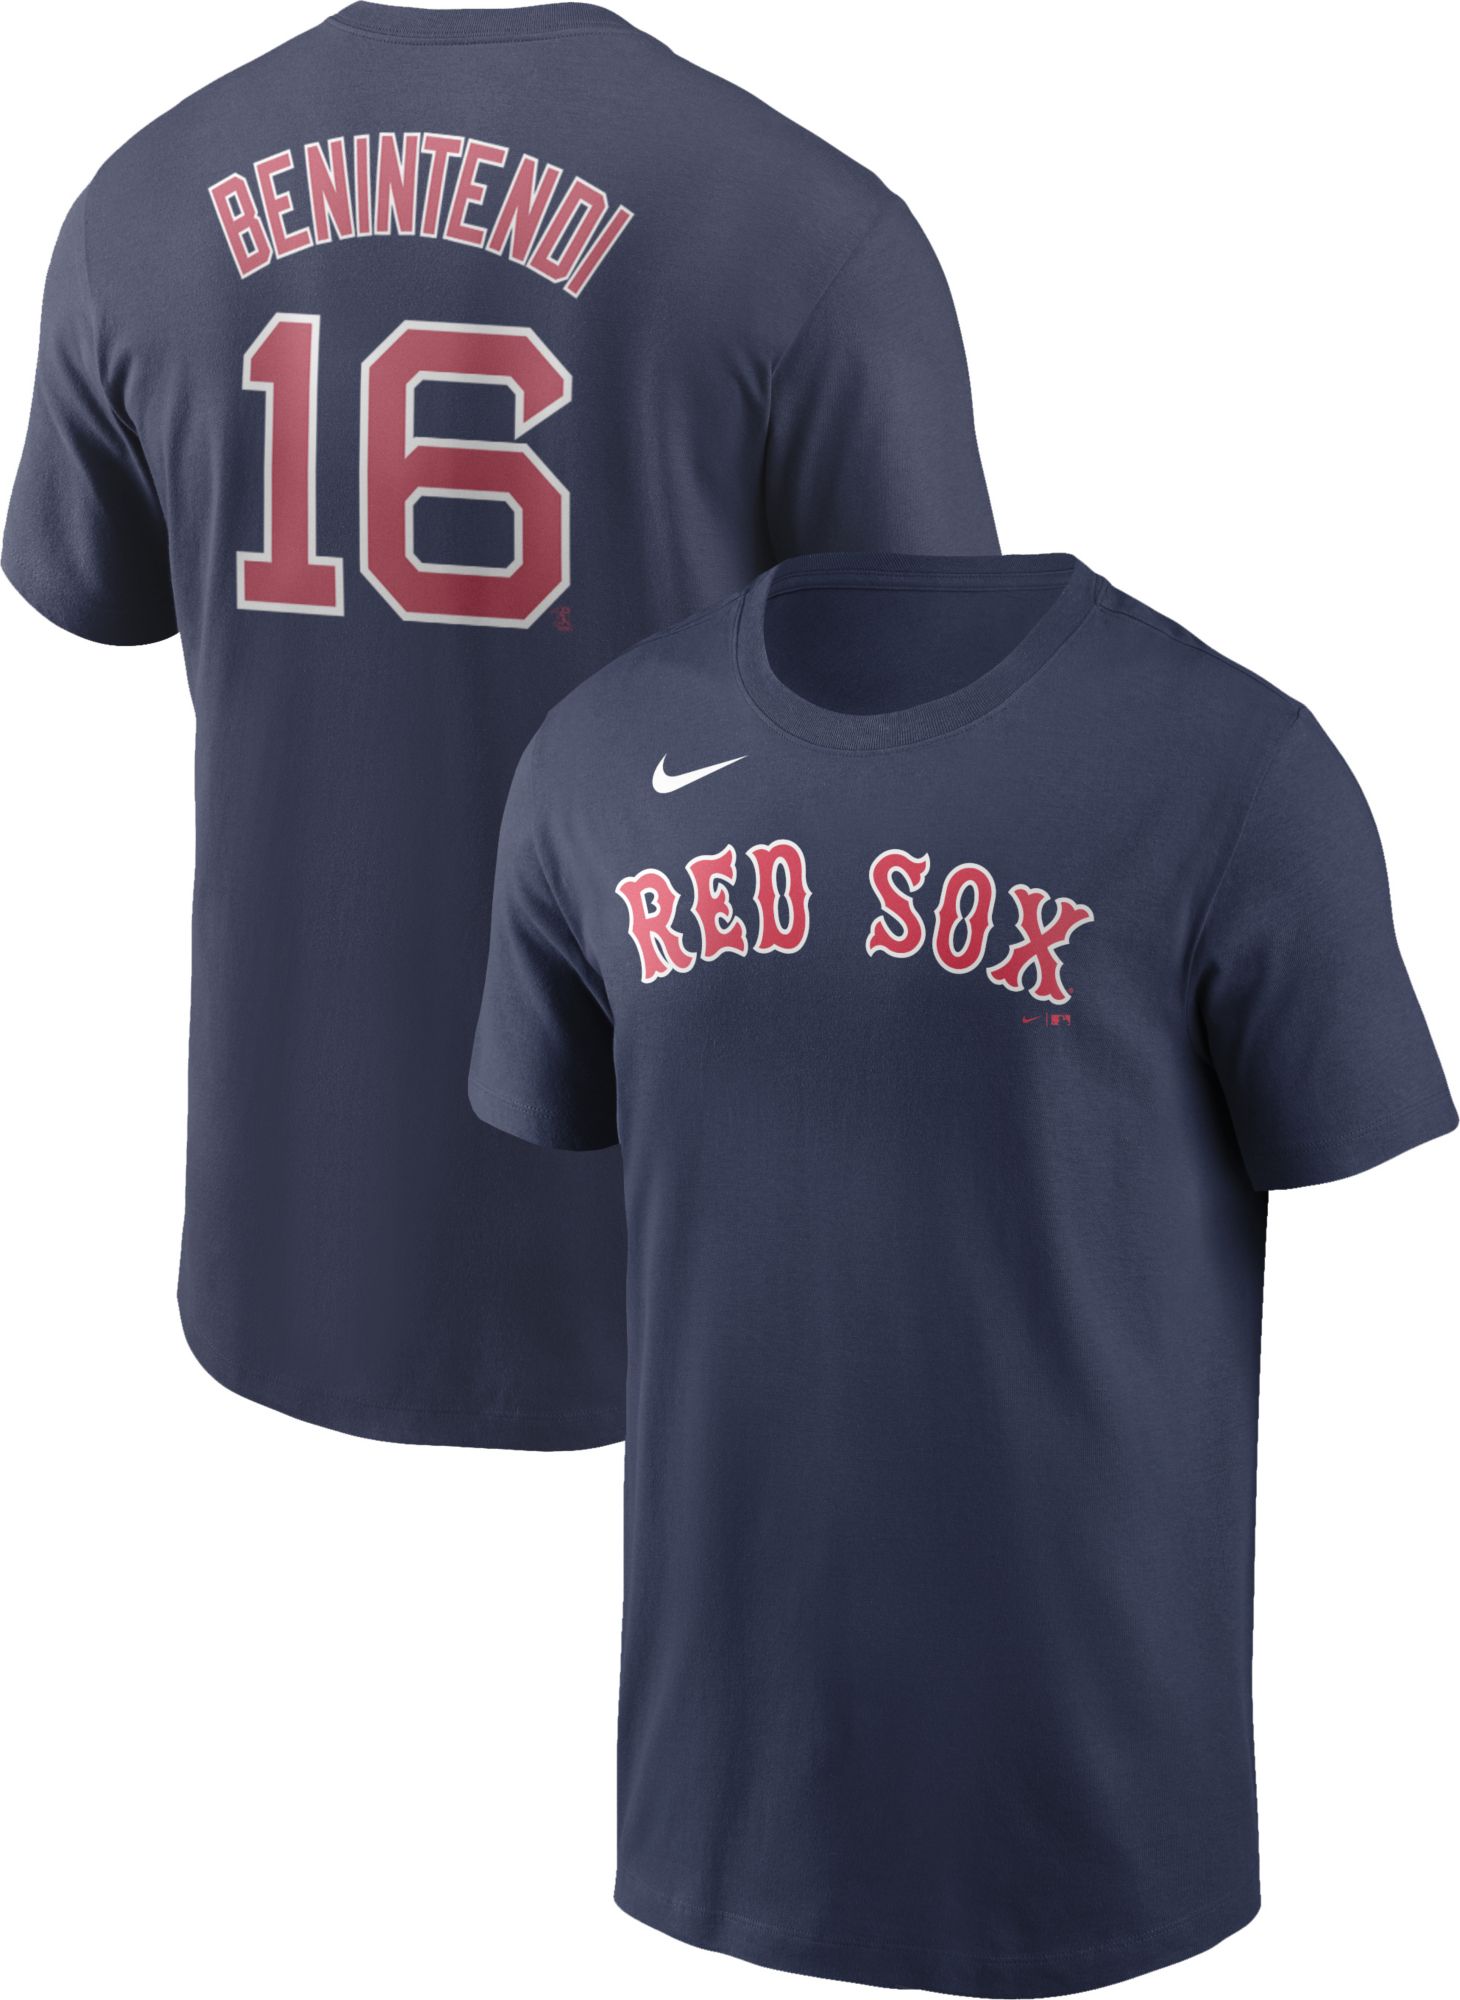 boston red sox player shirts